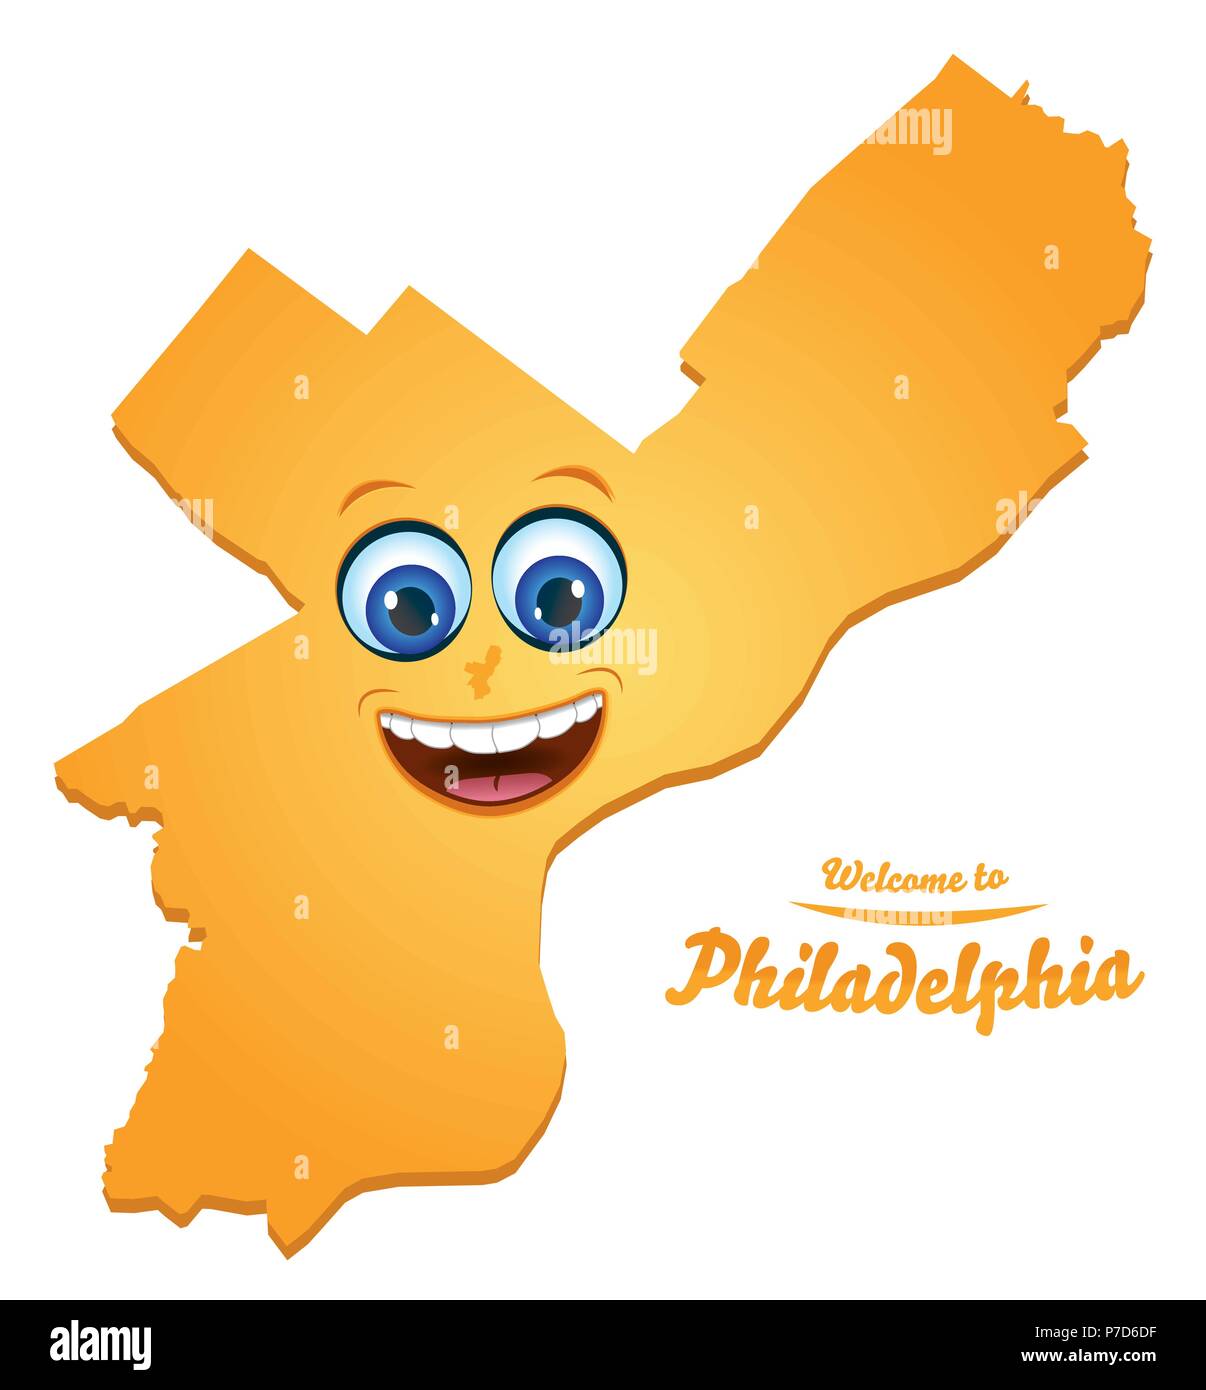 Philadelphia Pennsylvania city map with smiling face illustration Stock Vector